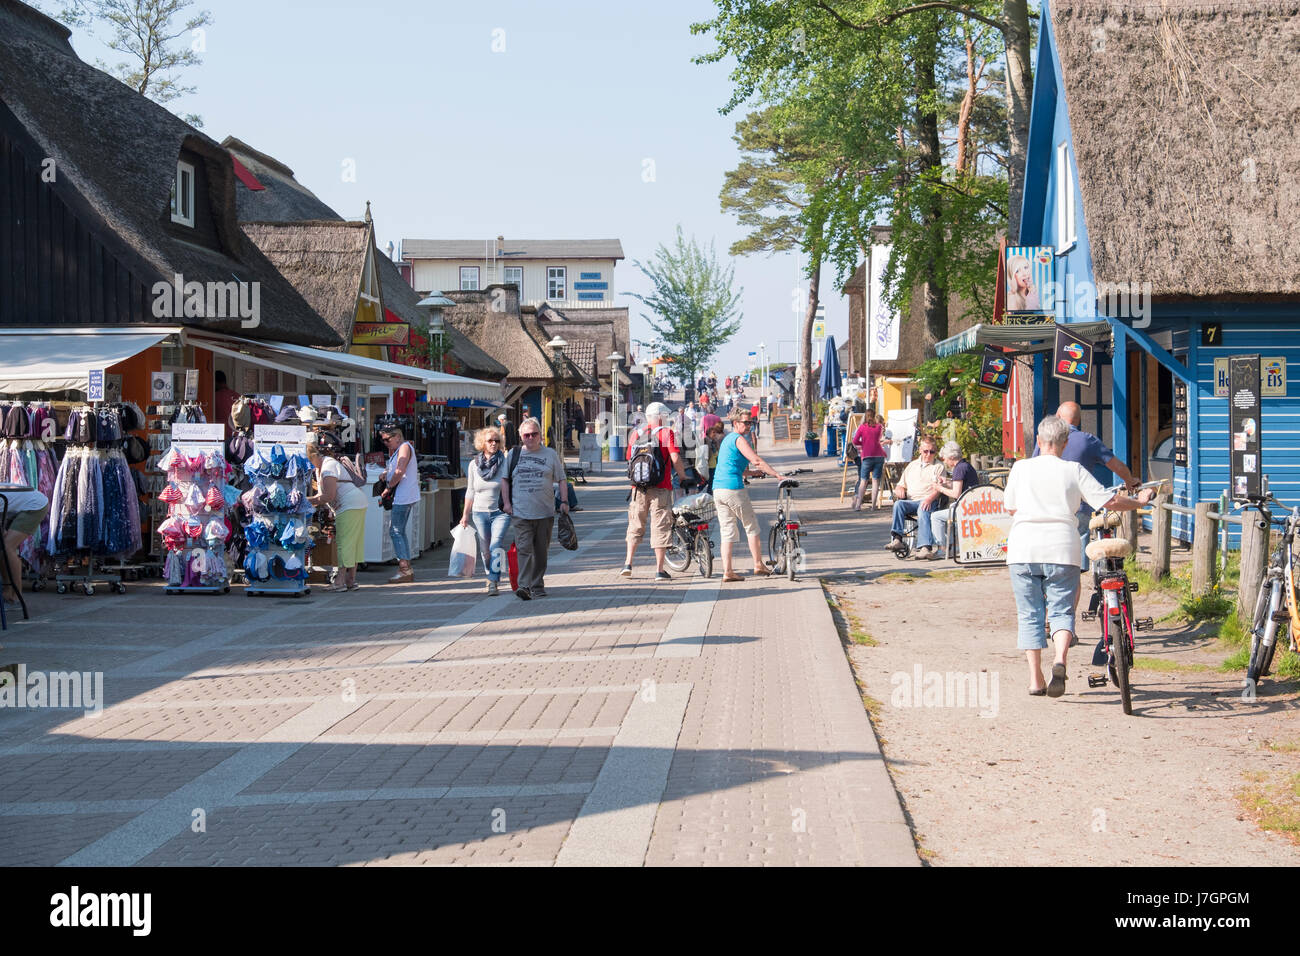 Shopping street in Prerow, Darss, Mecklenburg-Vorpommern, Germany Stock Photo